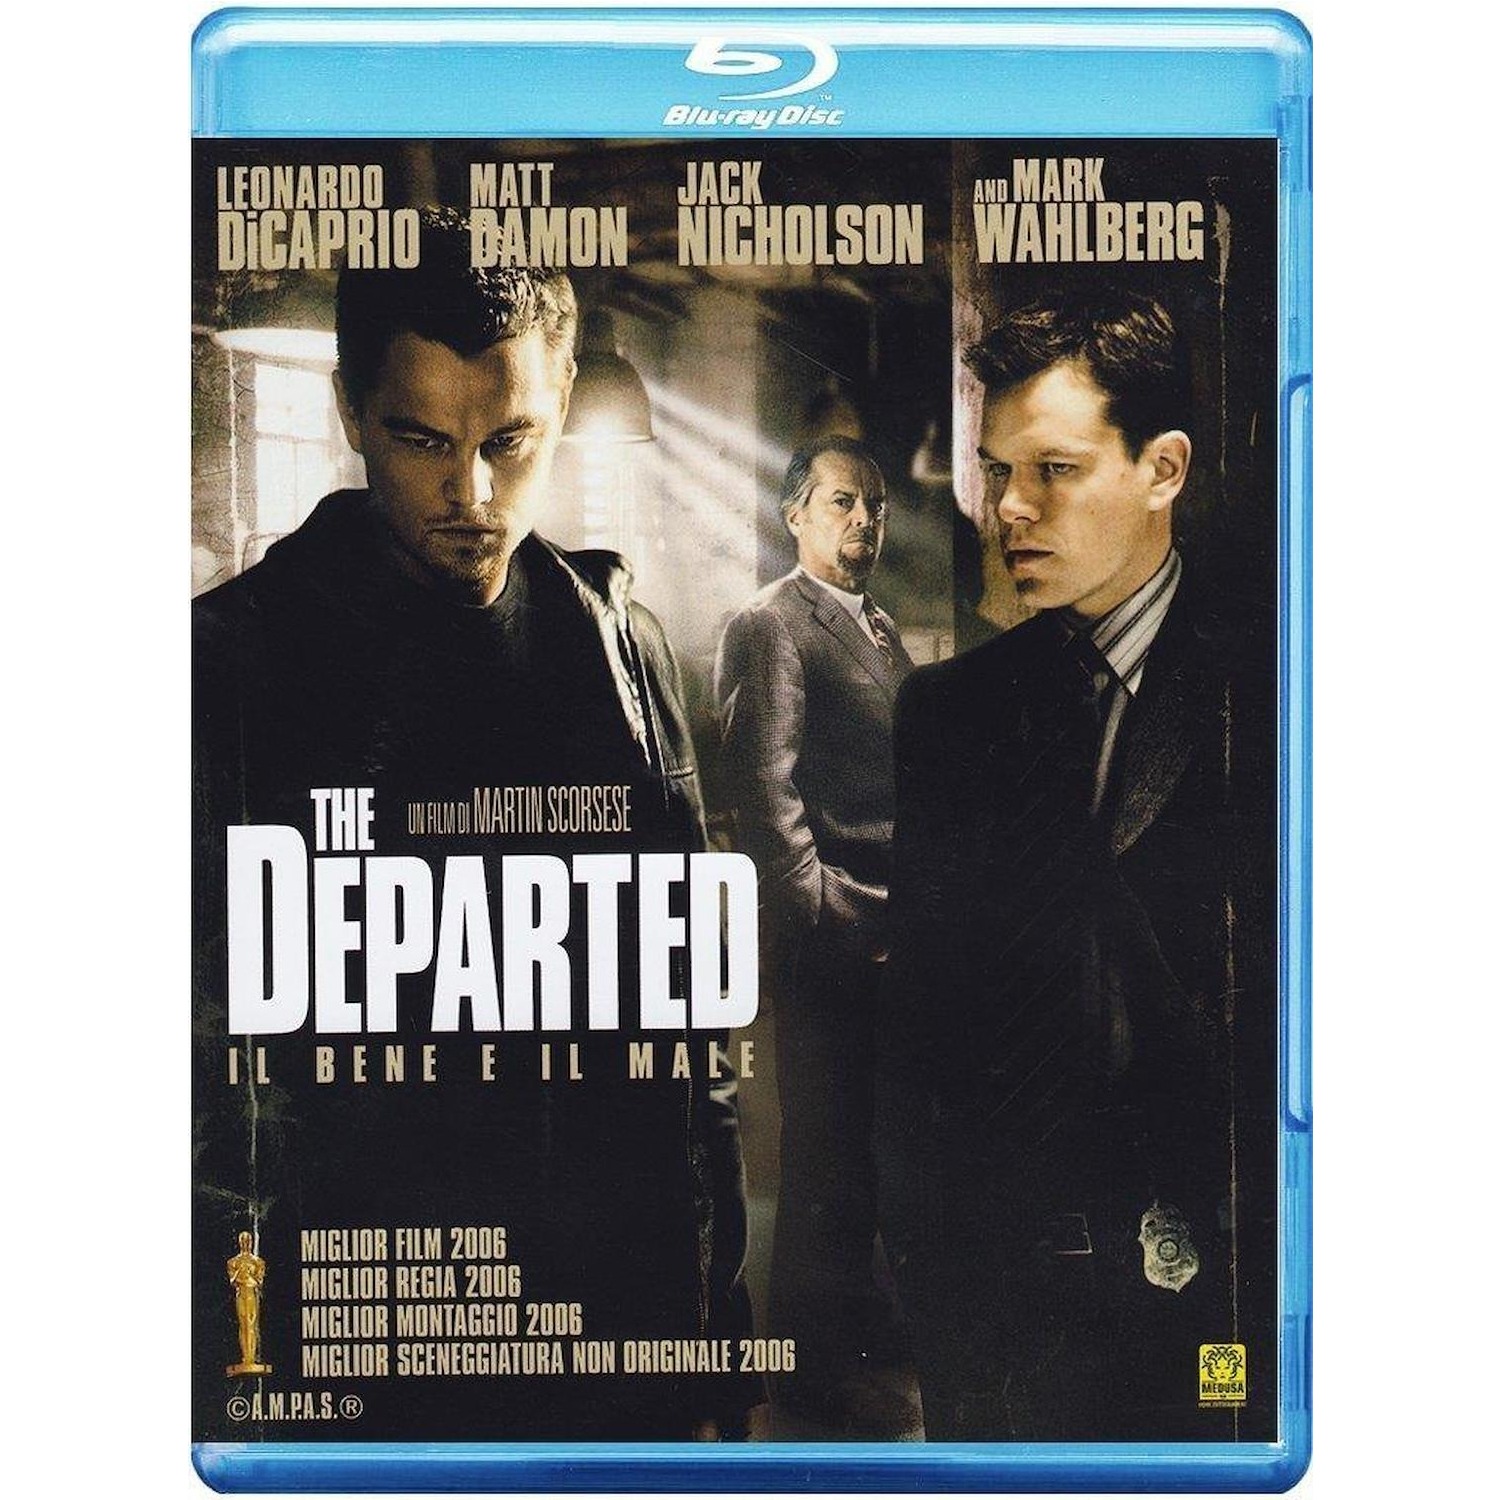 Immagine per Blu-ray The departed da DIMOStore